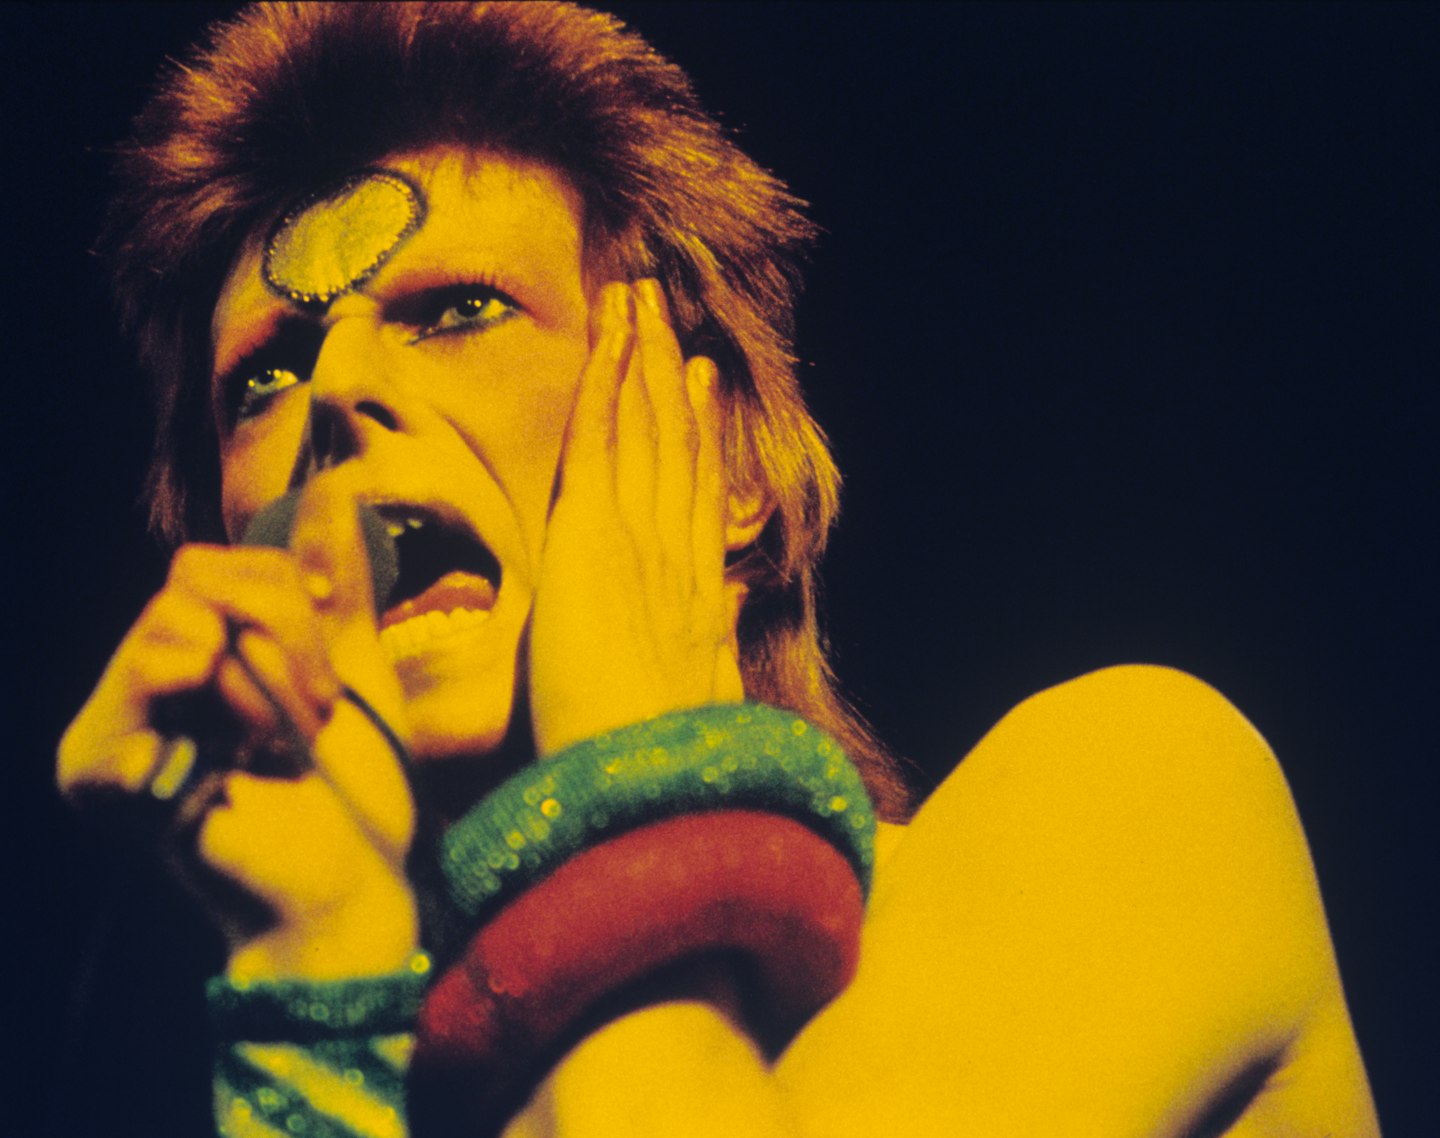 Bowie or Ziggy